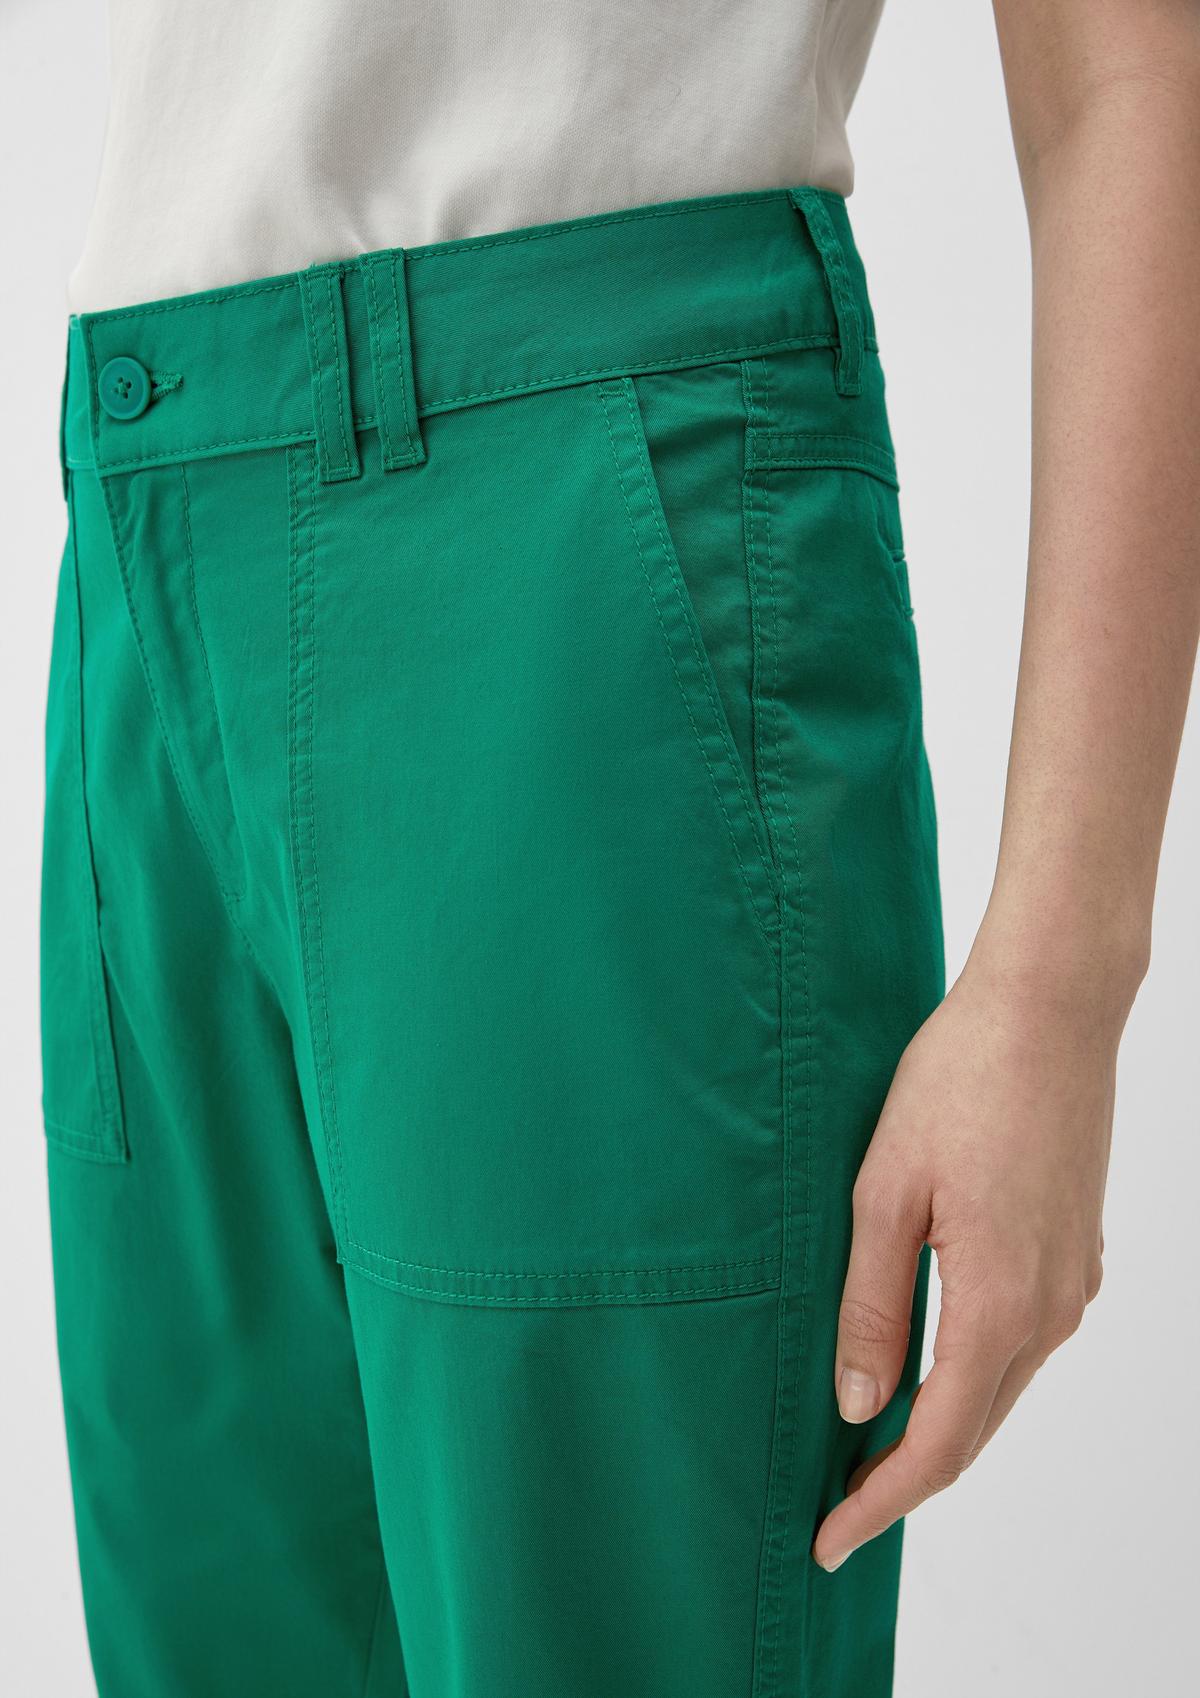 s.Oliver Relaxed: capri kalhoty s dvojitými poutky na opasek